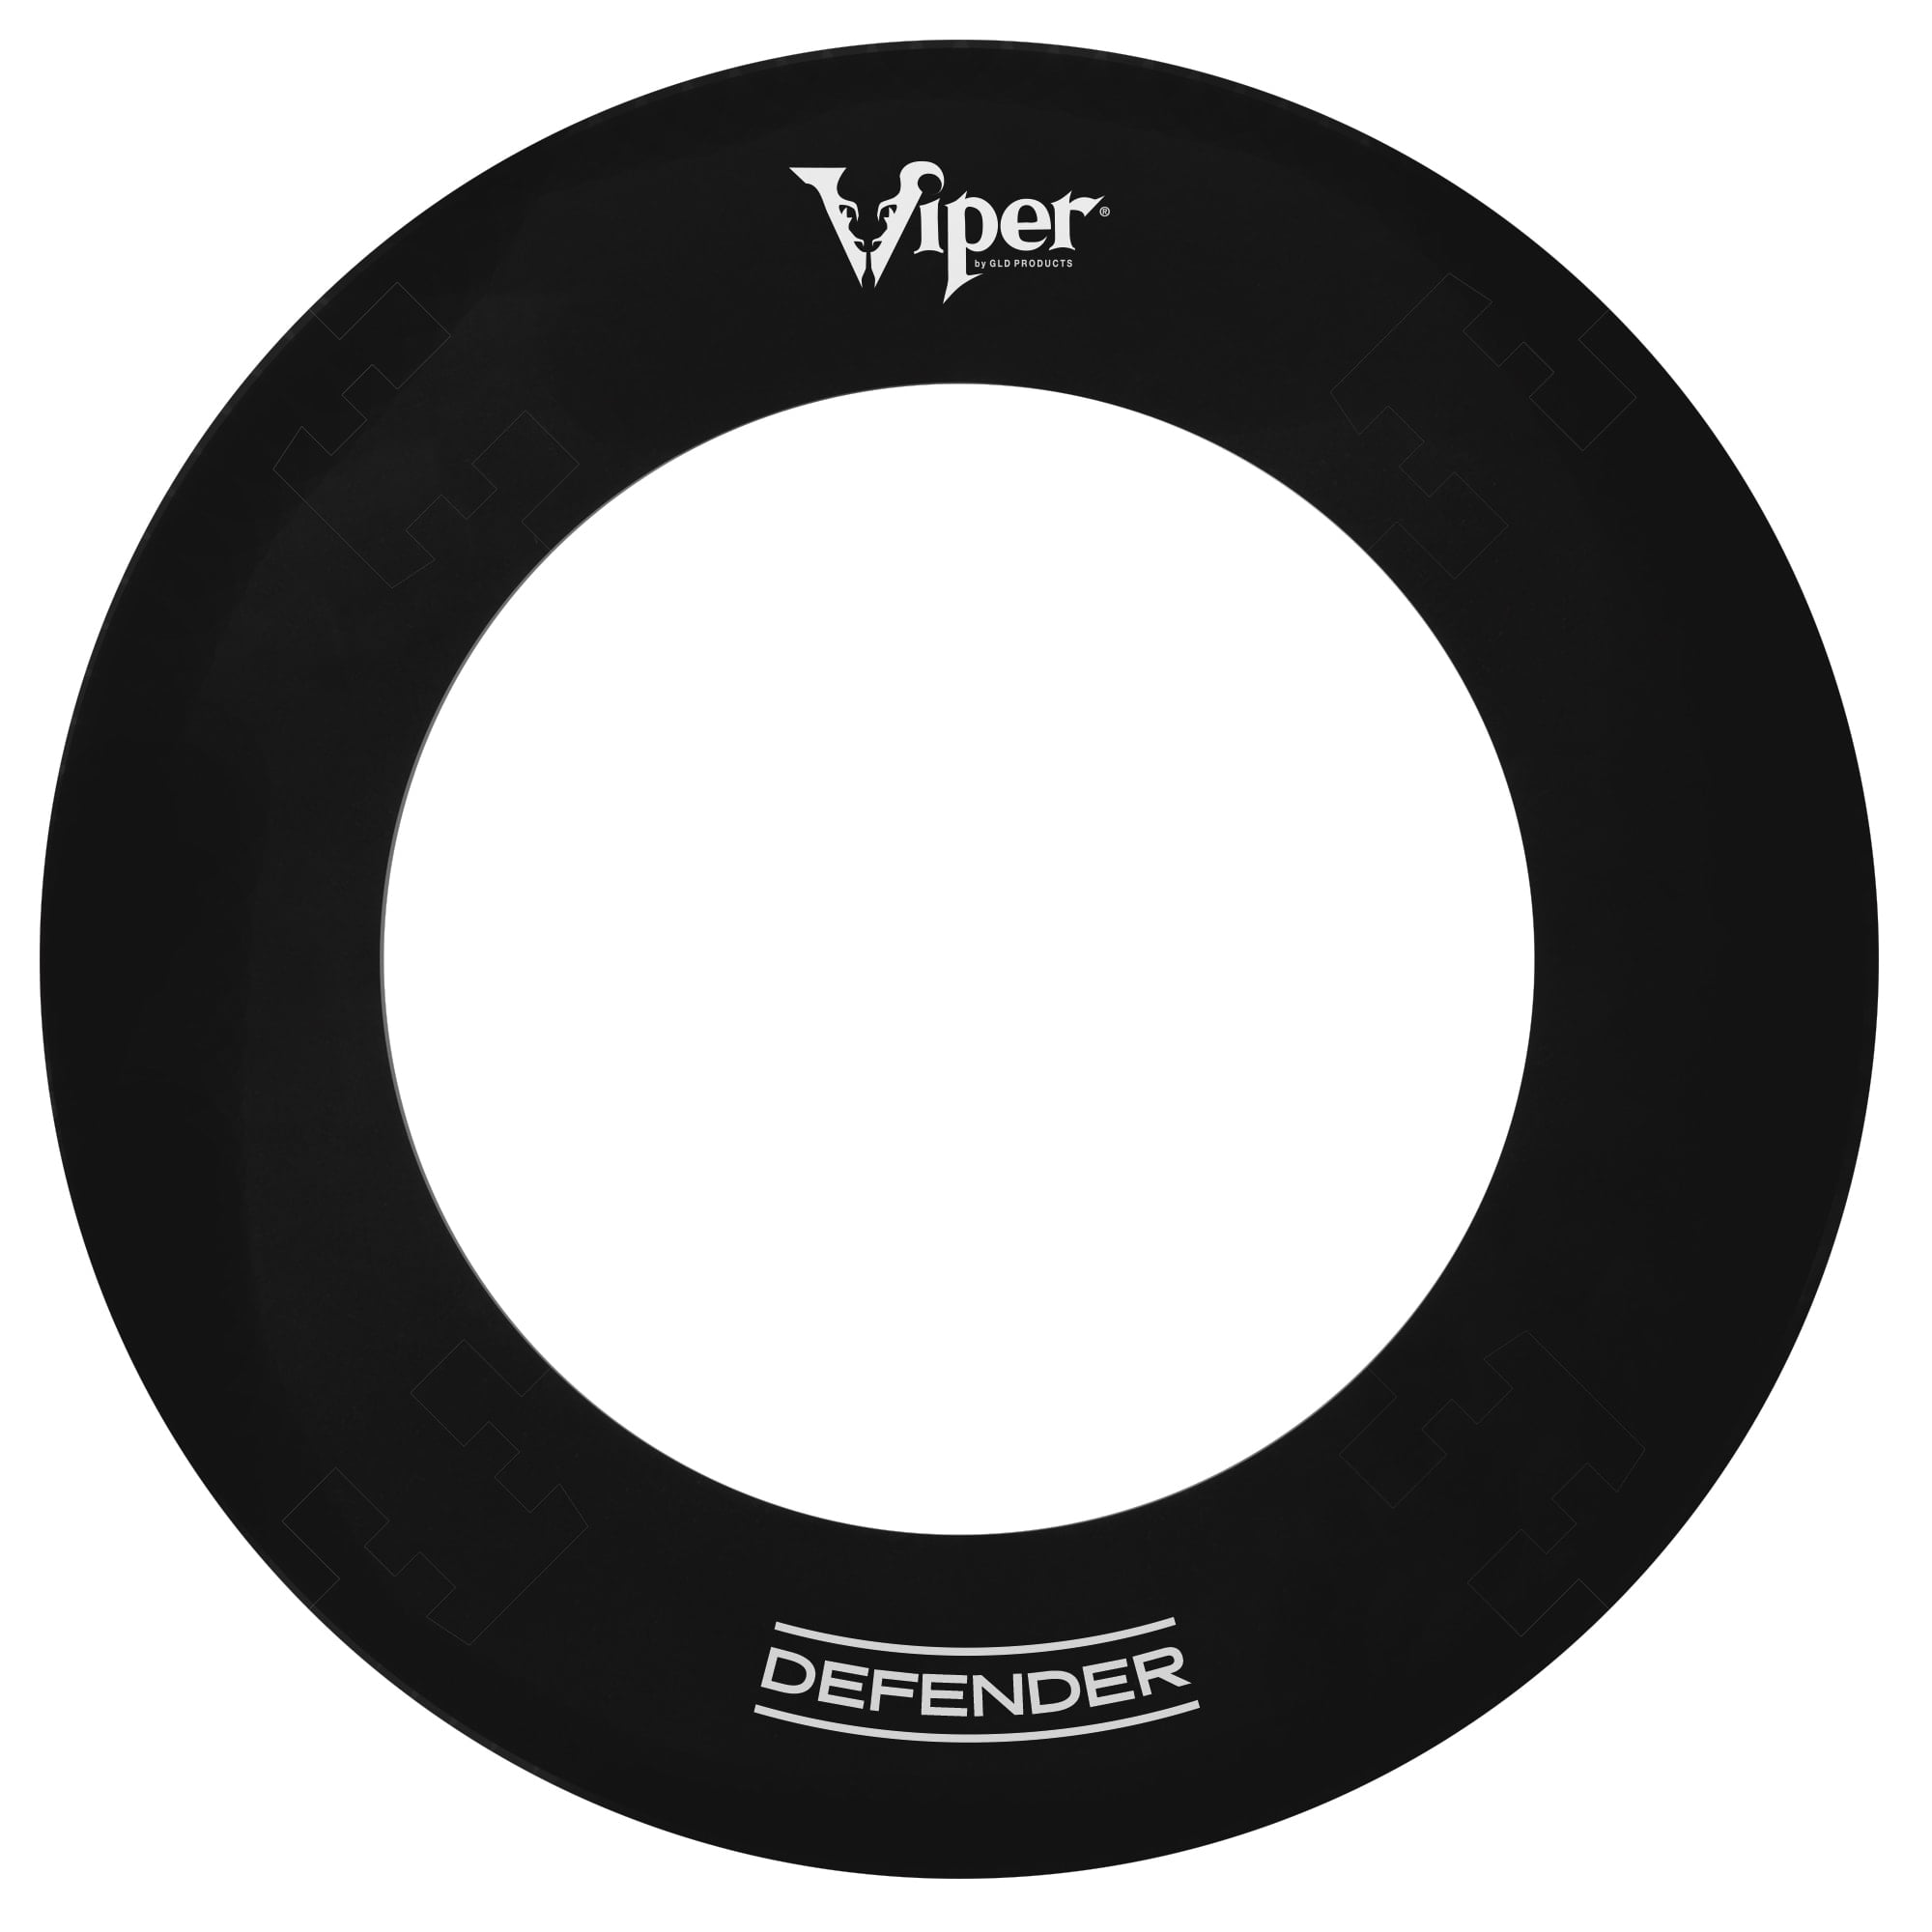 Viper DEFENDER Dartboard Backboard 4 Sisal Bristle Steel Tip DARTS Protect Wall 